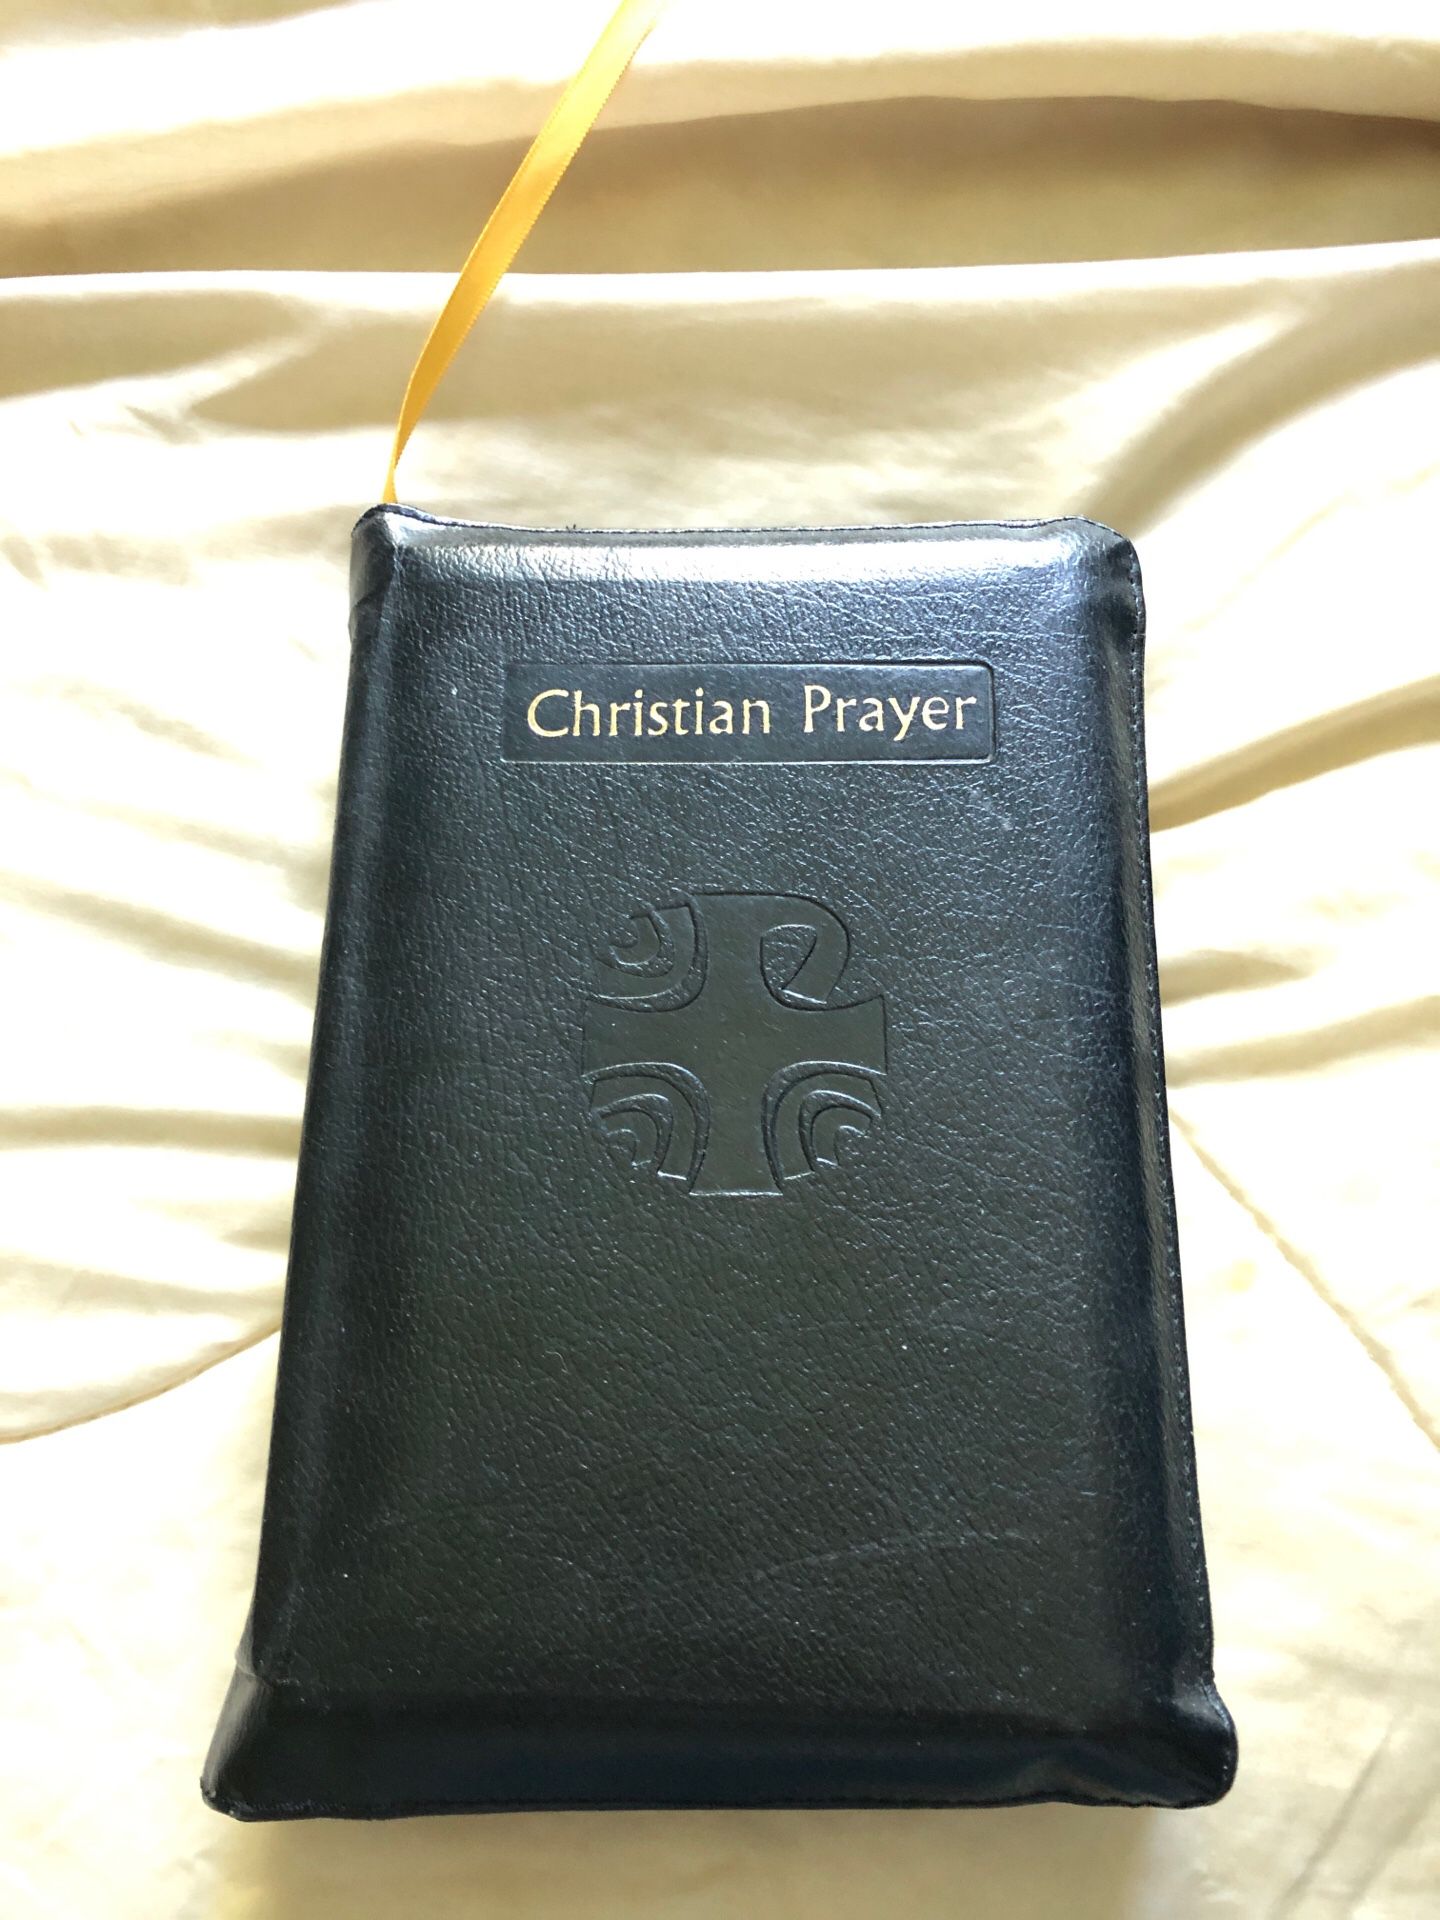 Christian Prayer (Catholic - Liturgy of the Hours - zippered leather)